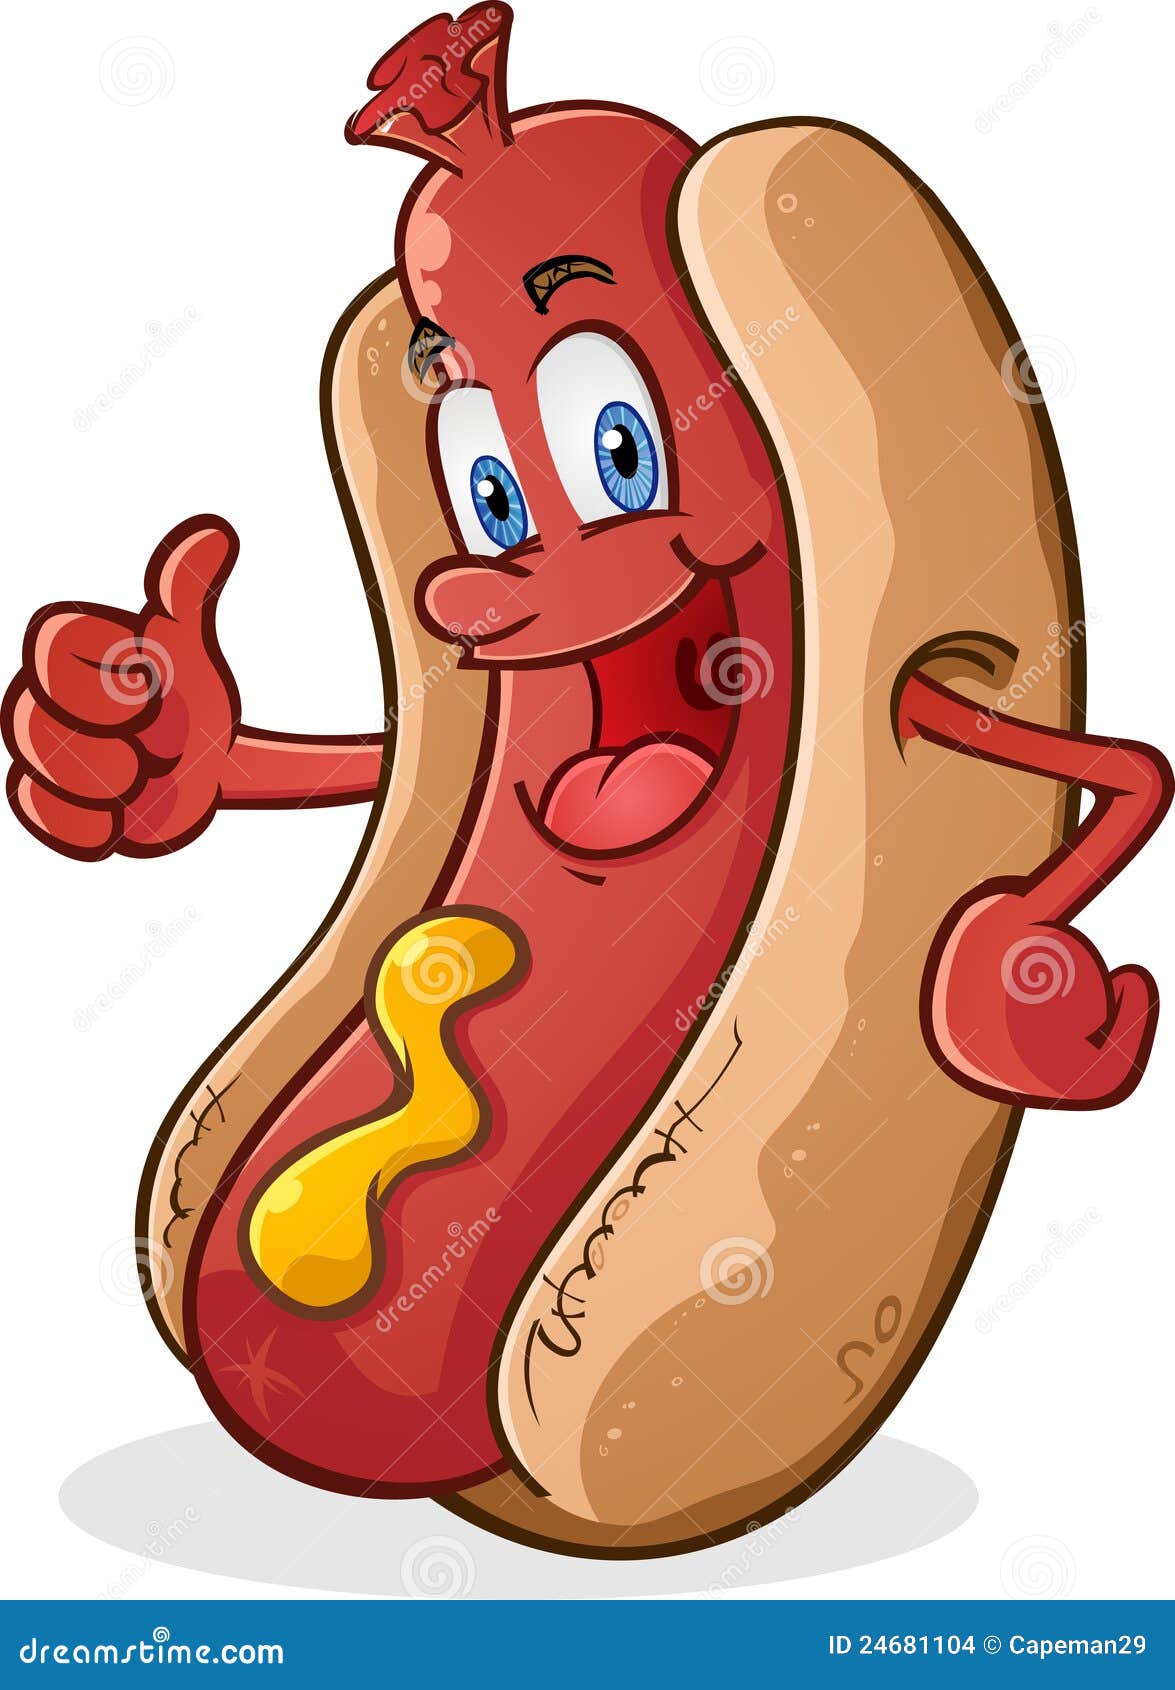 hot dog thumbs up